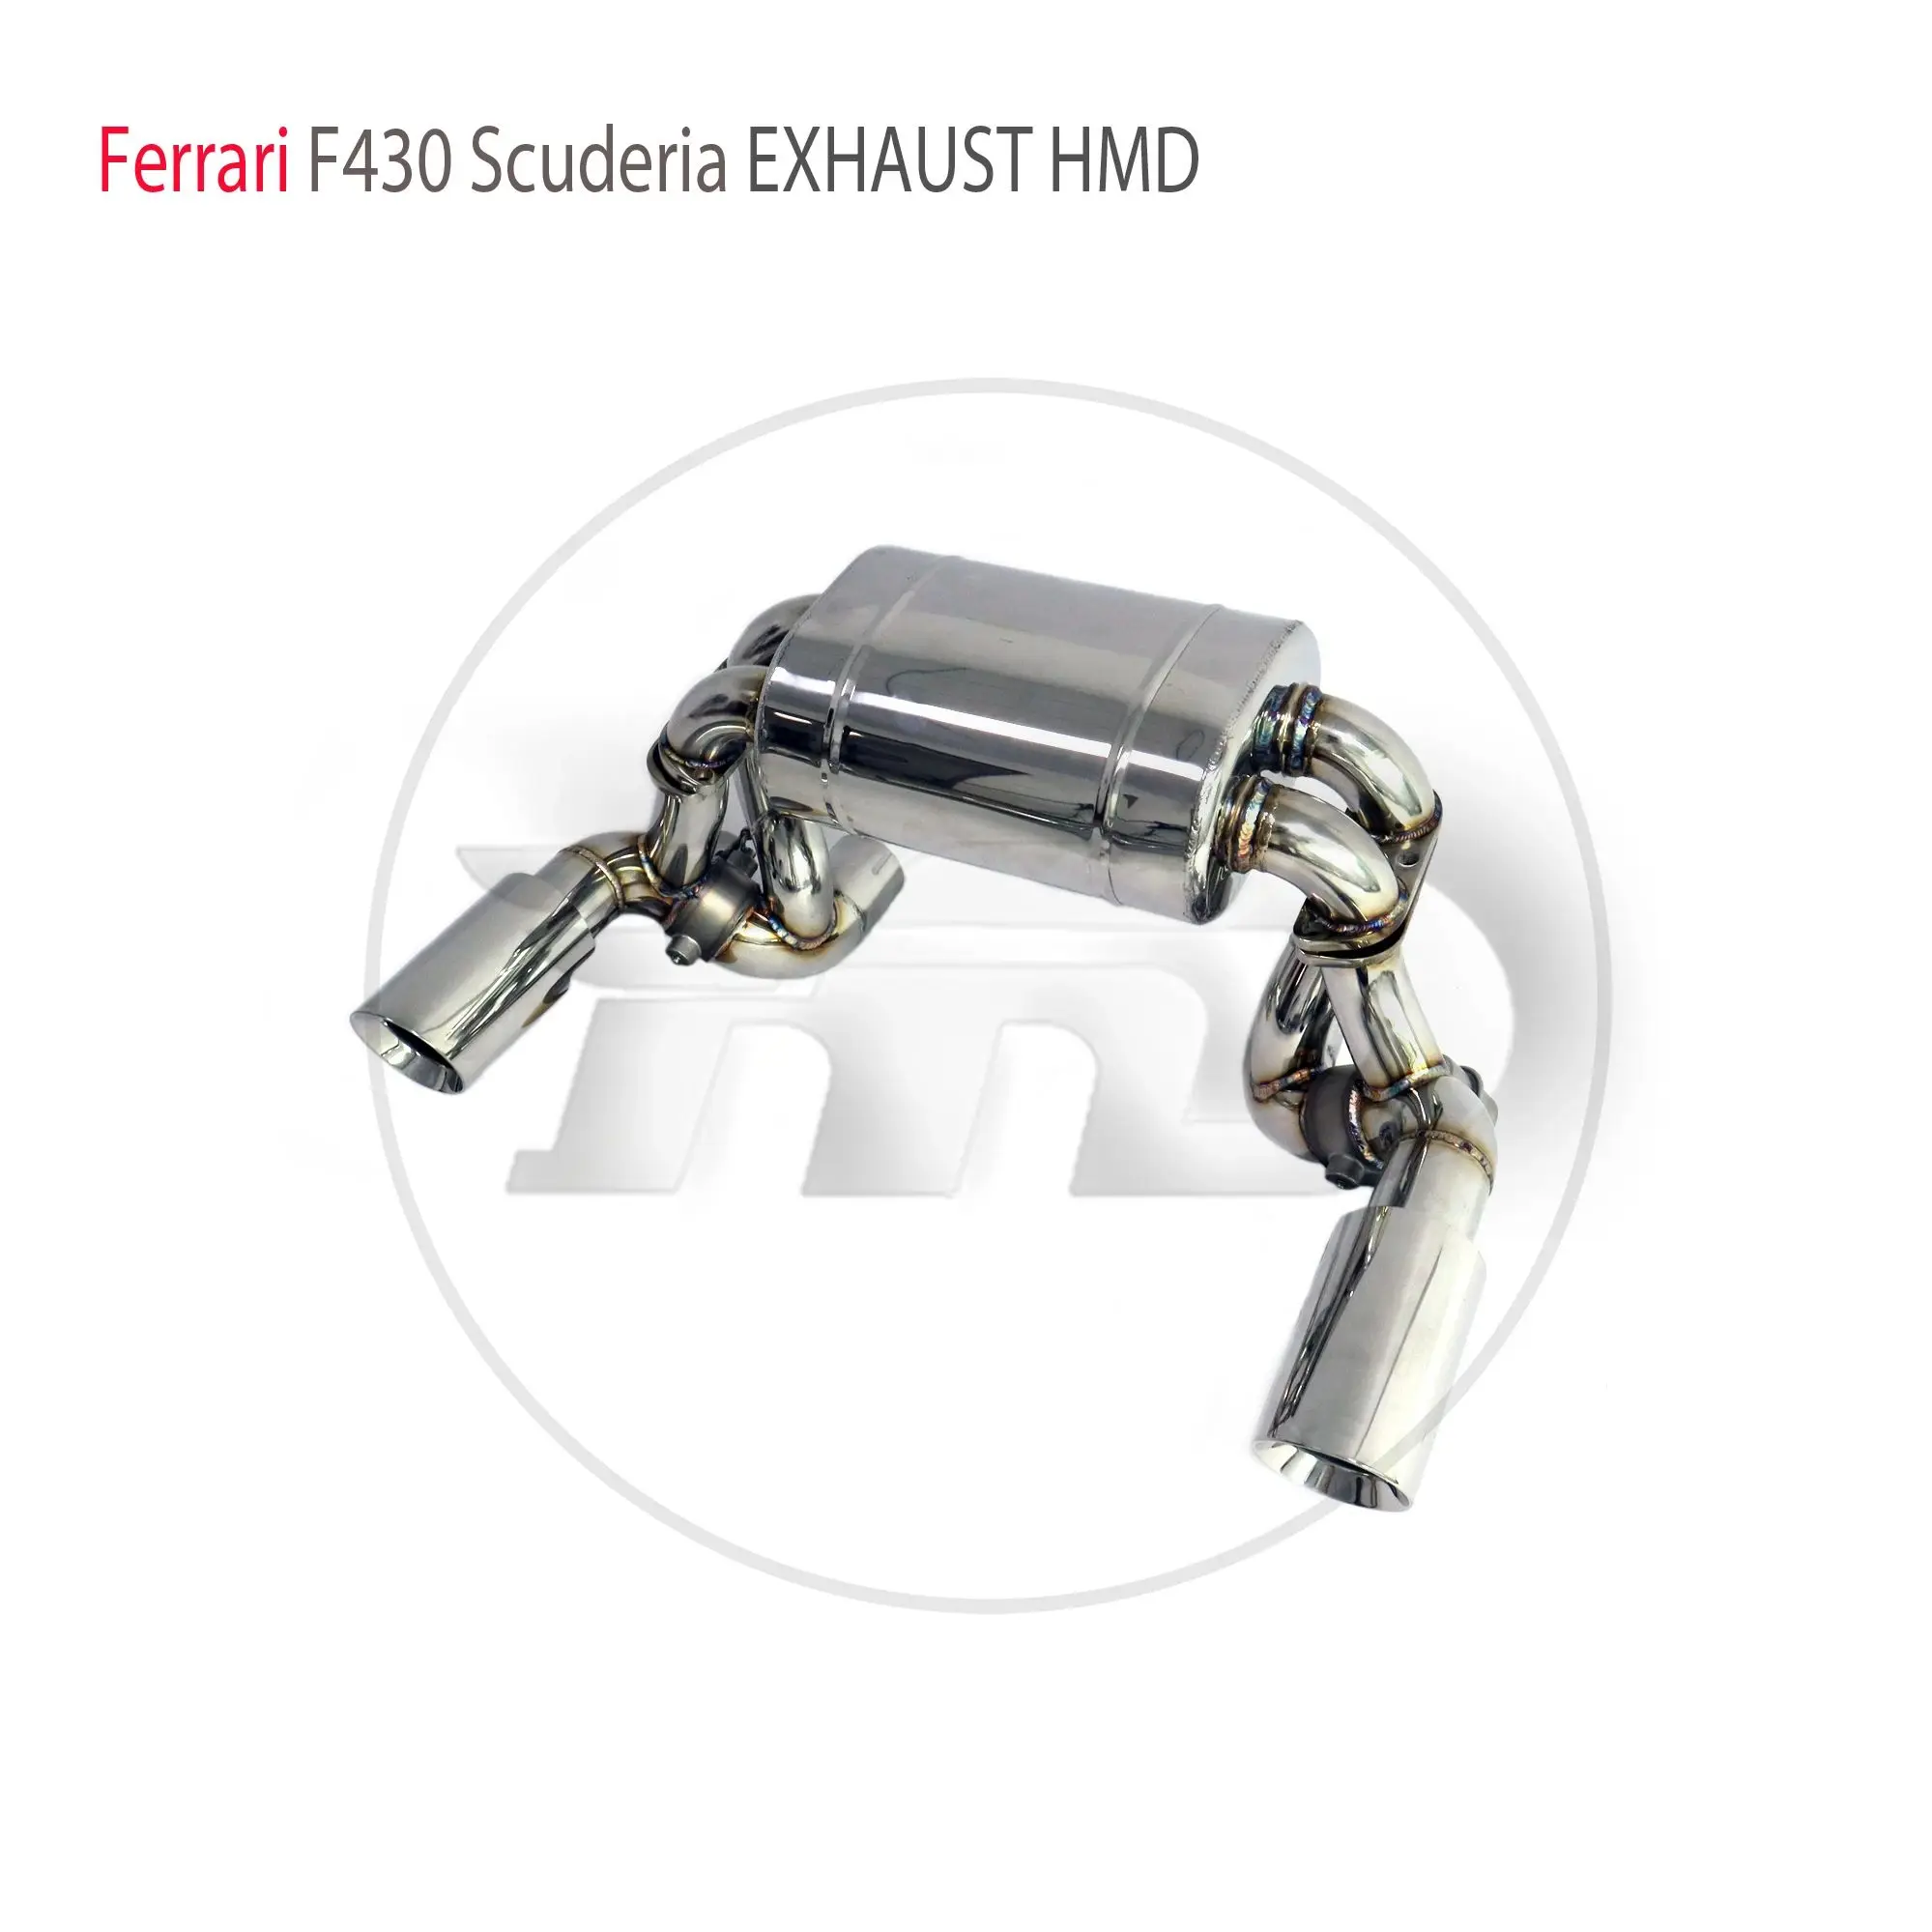 

HMD Stainless Steel Exhaust System Performance Catback For Ferrari F430 Scuderia Modification Electronic Valve Muffler